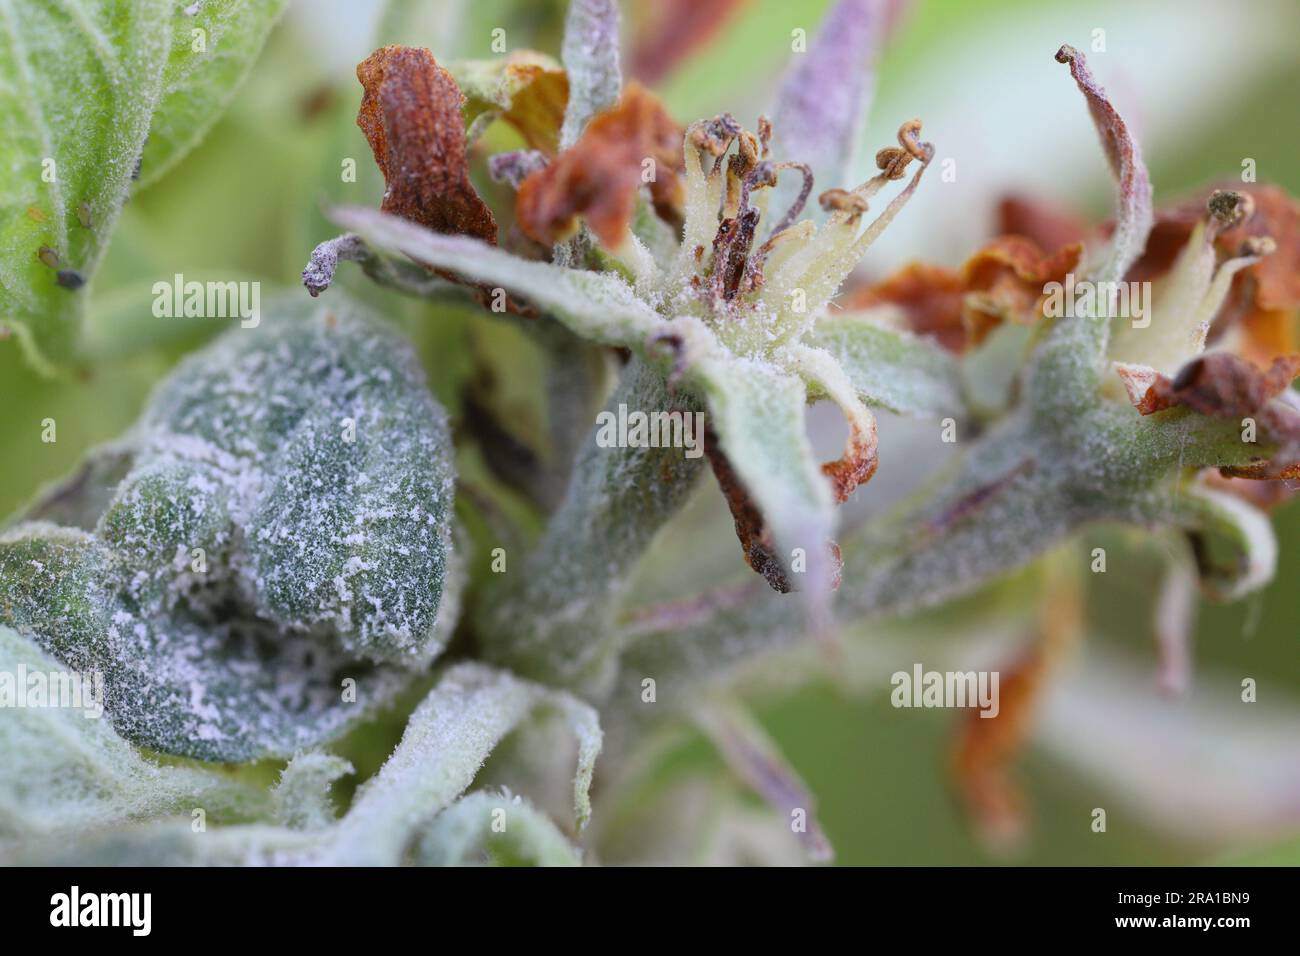 Primary infection of powdery mildew (Podosphaera leucotricha) on apple leaves and flowers. Stock Photo